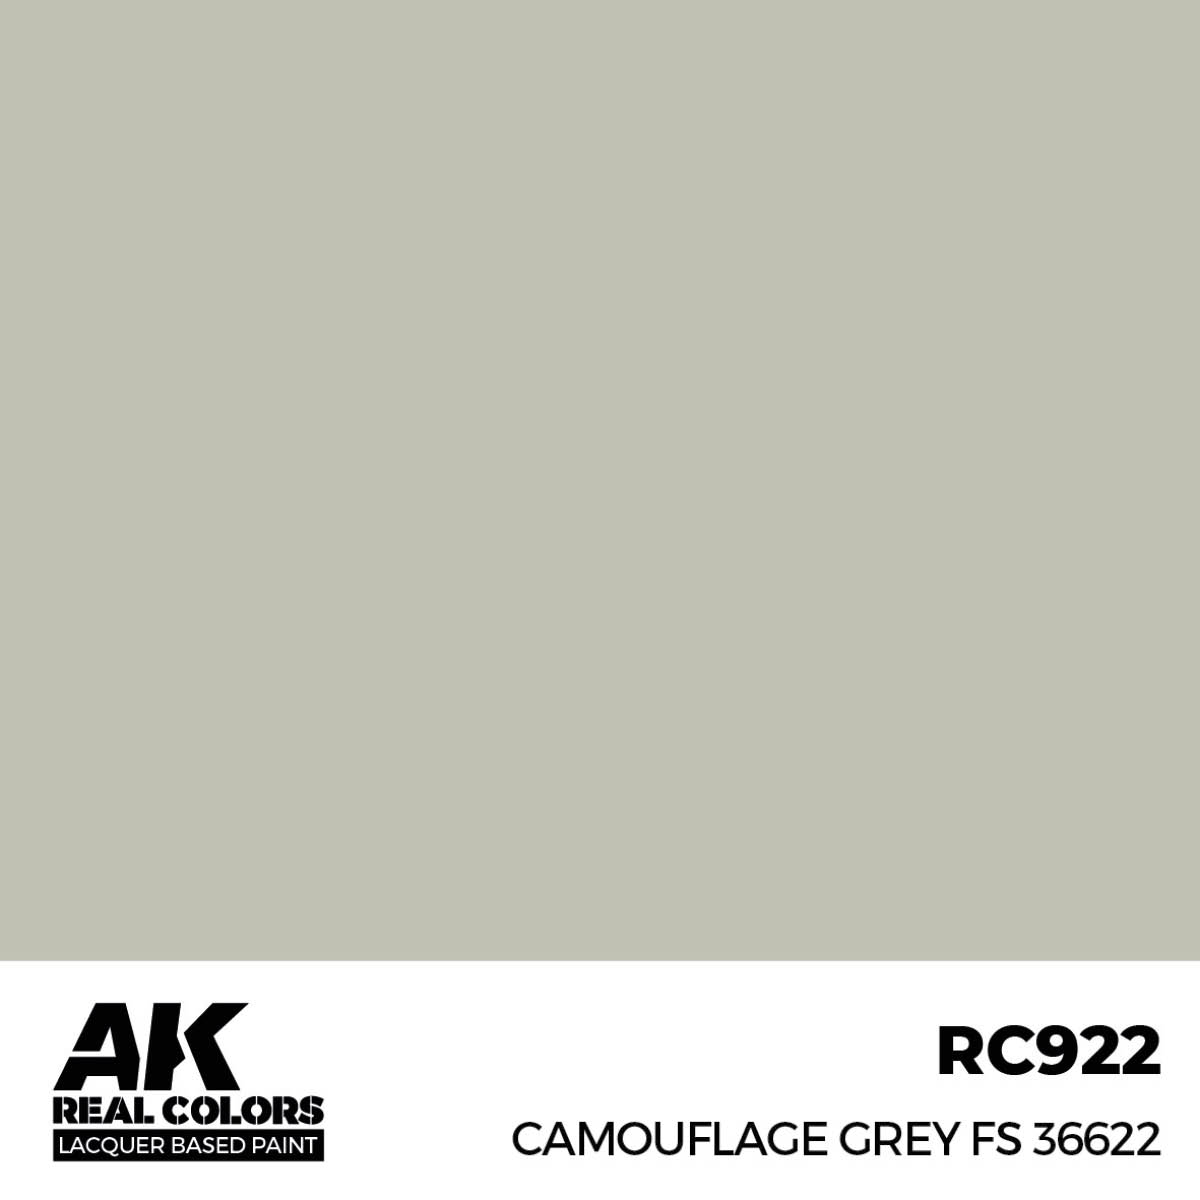 Camouflage Grey FS 36622